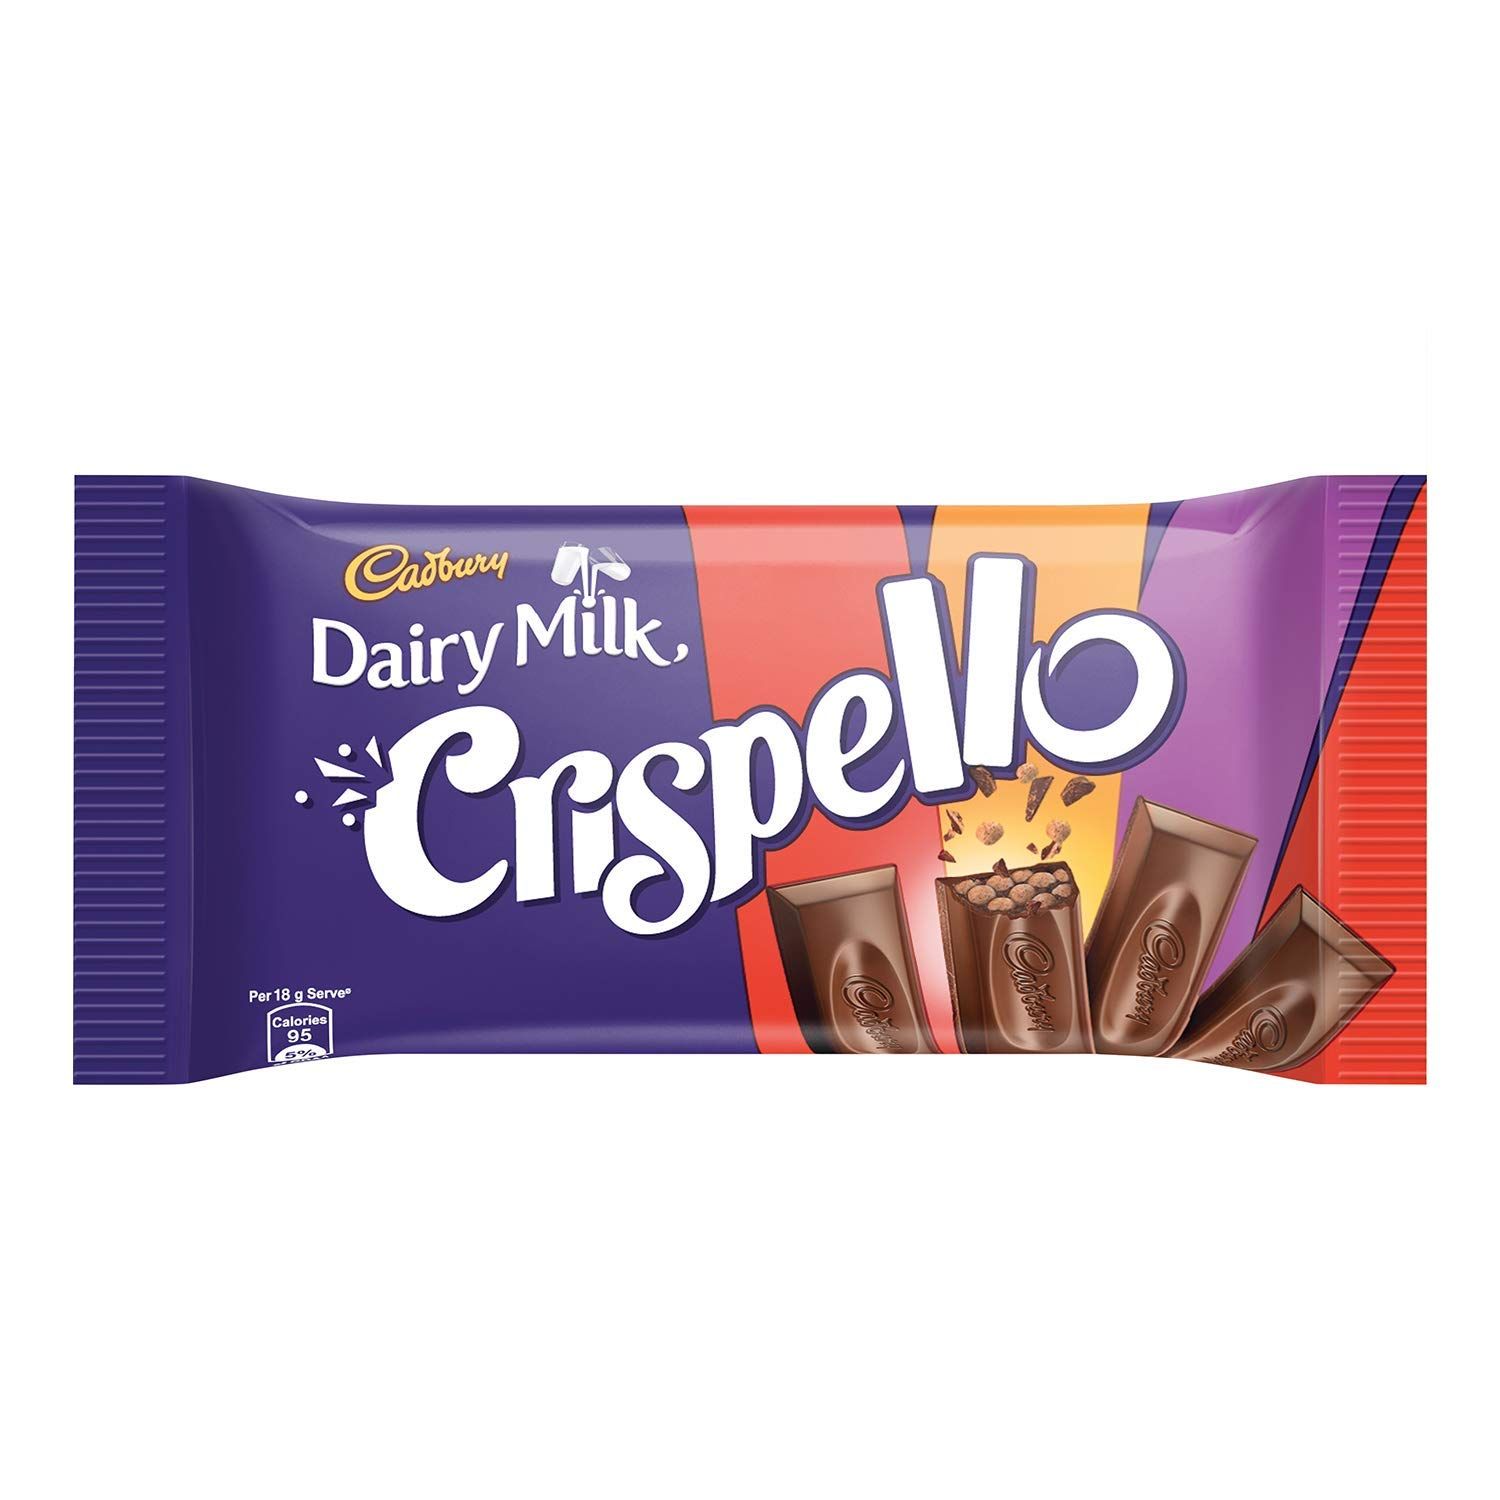 Cadbury Dairy Milk Crispello Chocolate Bar Image